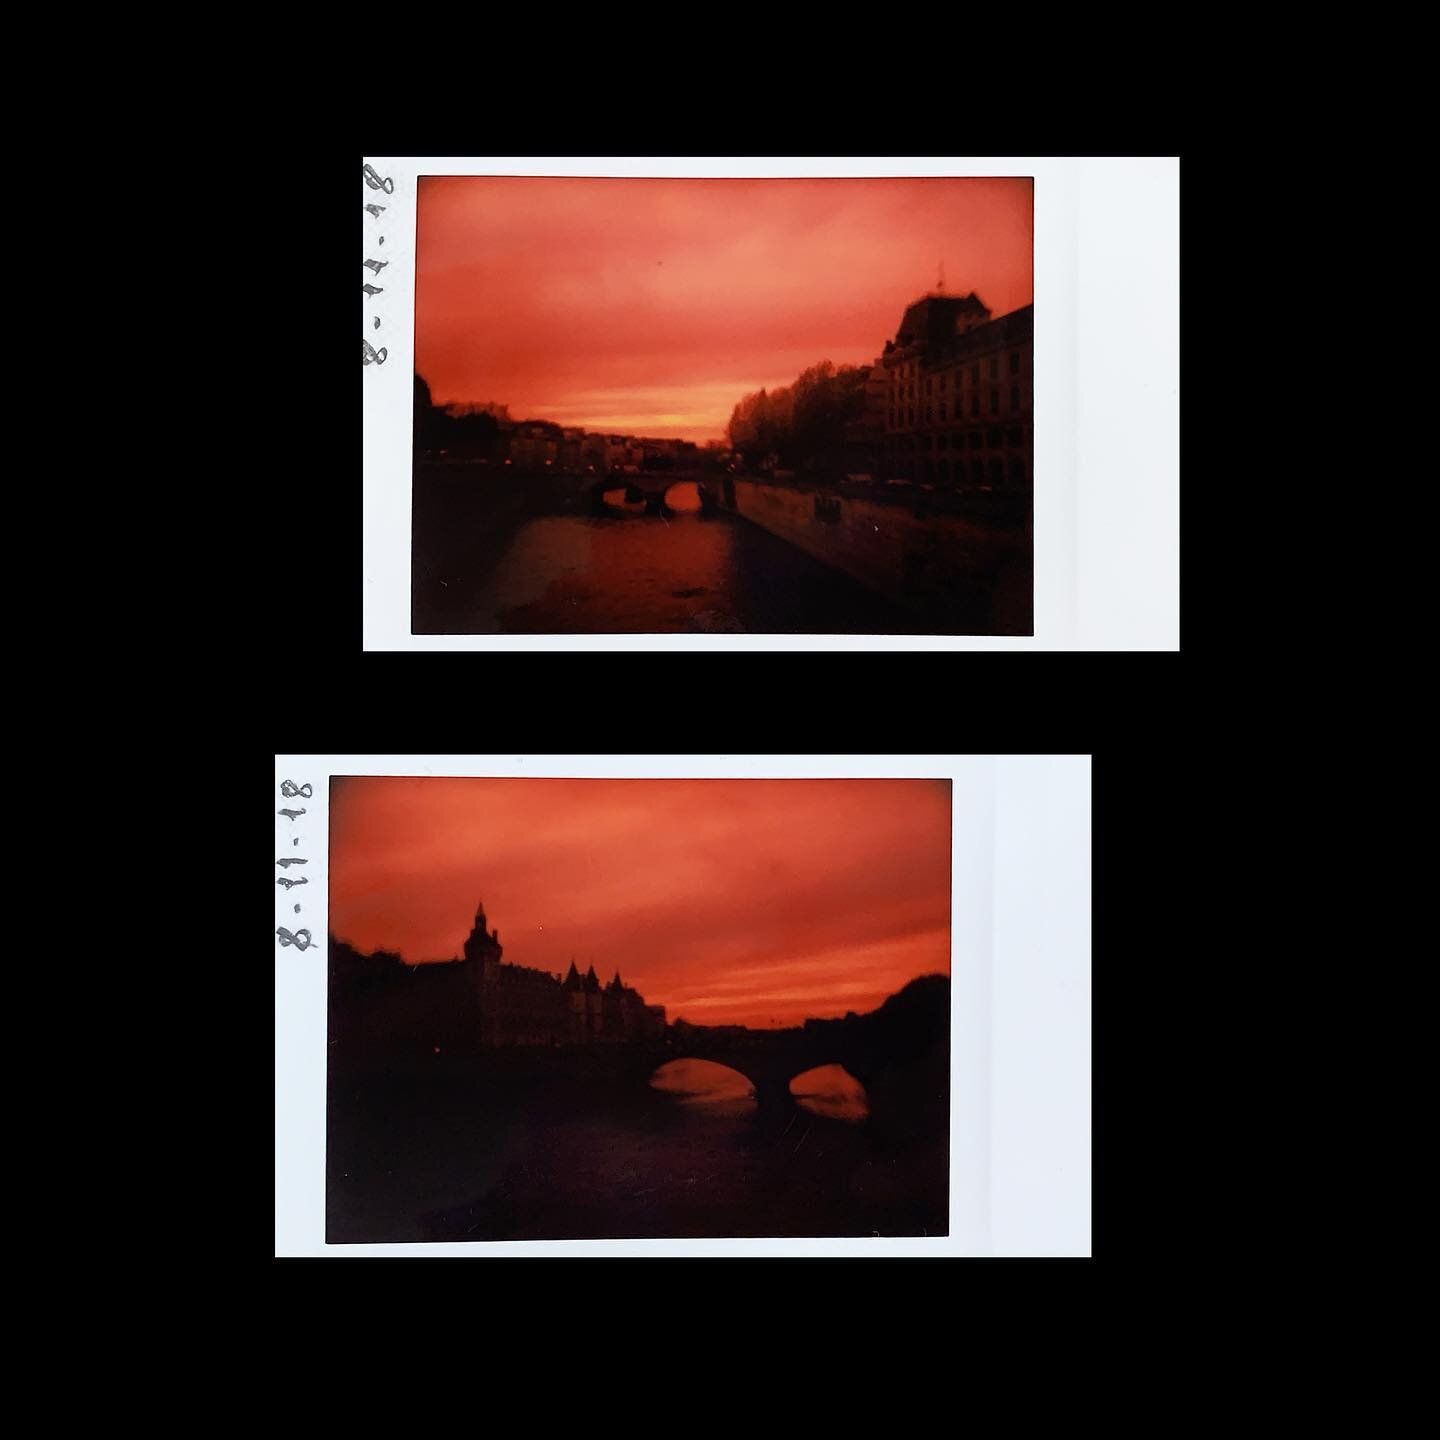 #paris #france #landscape #urban #architecture #red #polaroid #polaroids #instantphoto #photography #fujifilm #instax #photo #photos #pic #pics #picture #pictures #snapshot #art #picoftheday #photooftheday #color #exposure #travel #traveling #vacatio